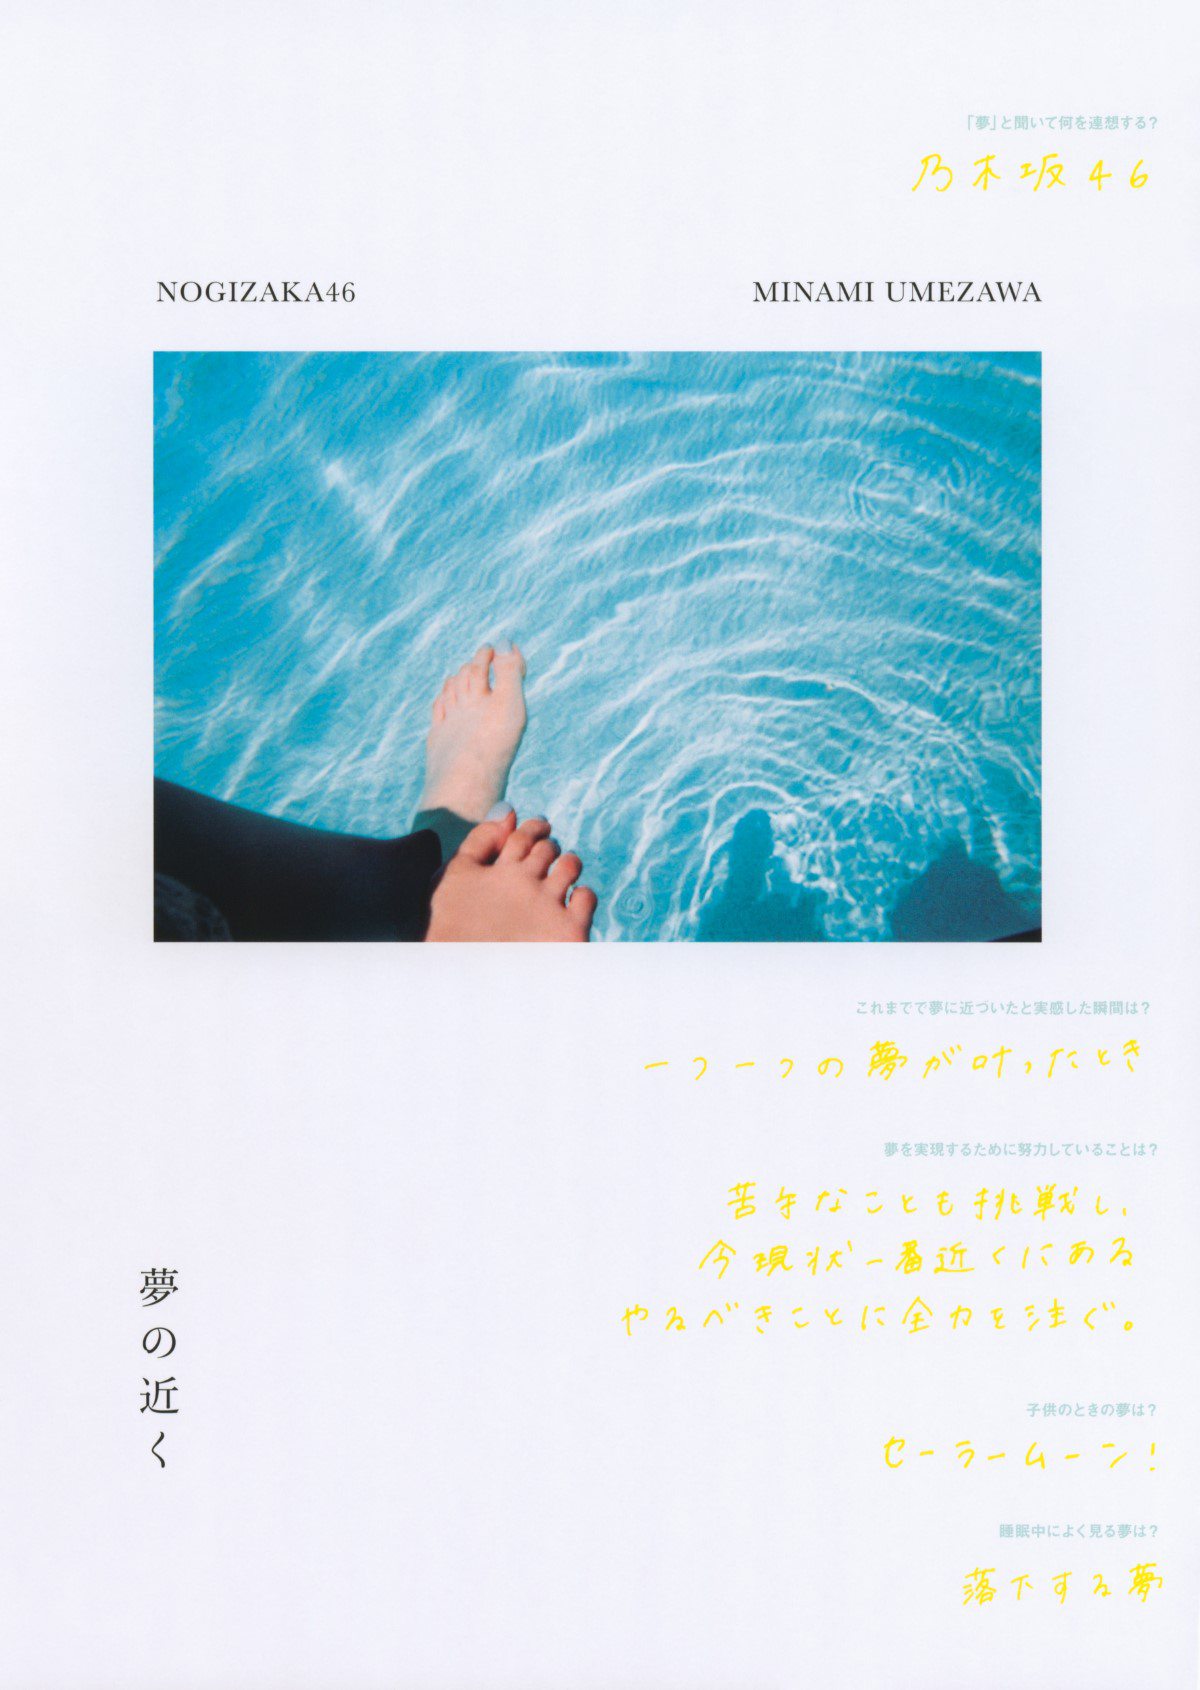 Photobook 2020 09 29 Minami Umezawa 梅澤美波 1st Photobook Near the dream 夢の近く A 0003 Front Cover 9835232307.jpg